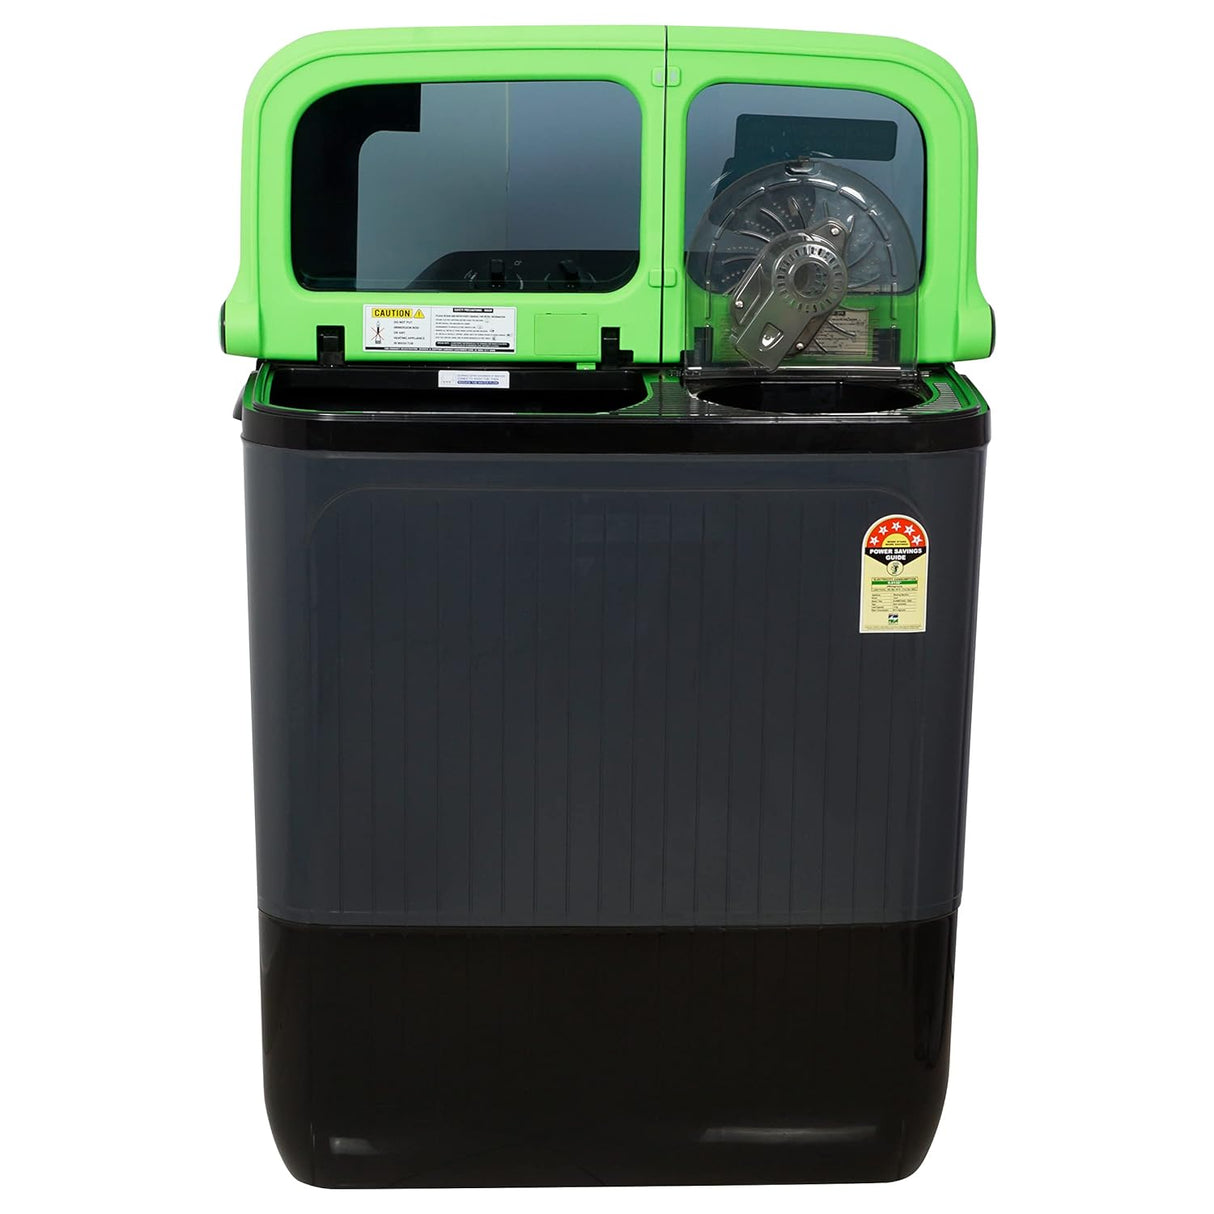 Lloyd 7.5 Kg 5 Star Semi-Automatic Top Load Washing Machine (GLWMS75ANGEL, Black & Yellow, Active Soak)